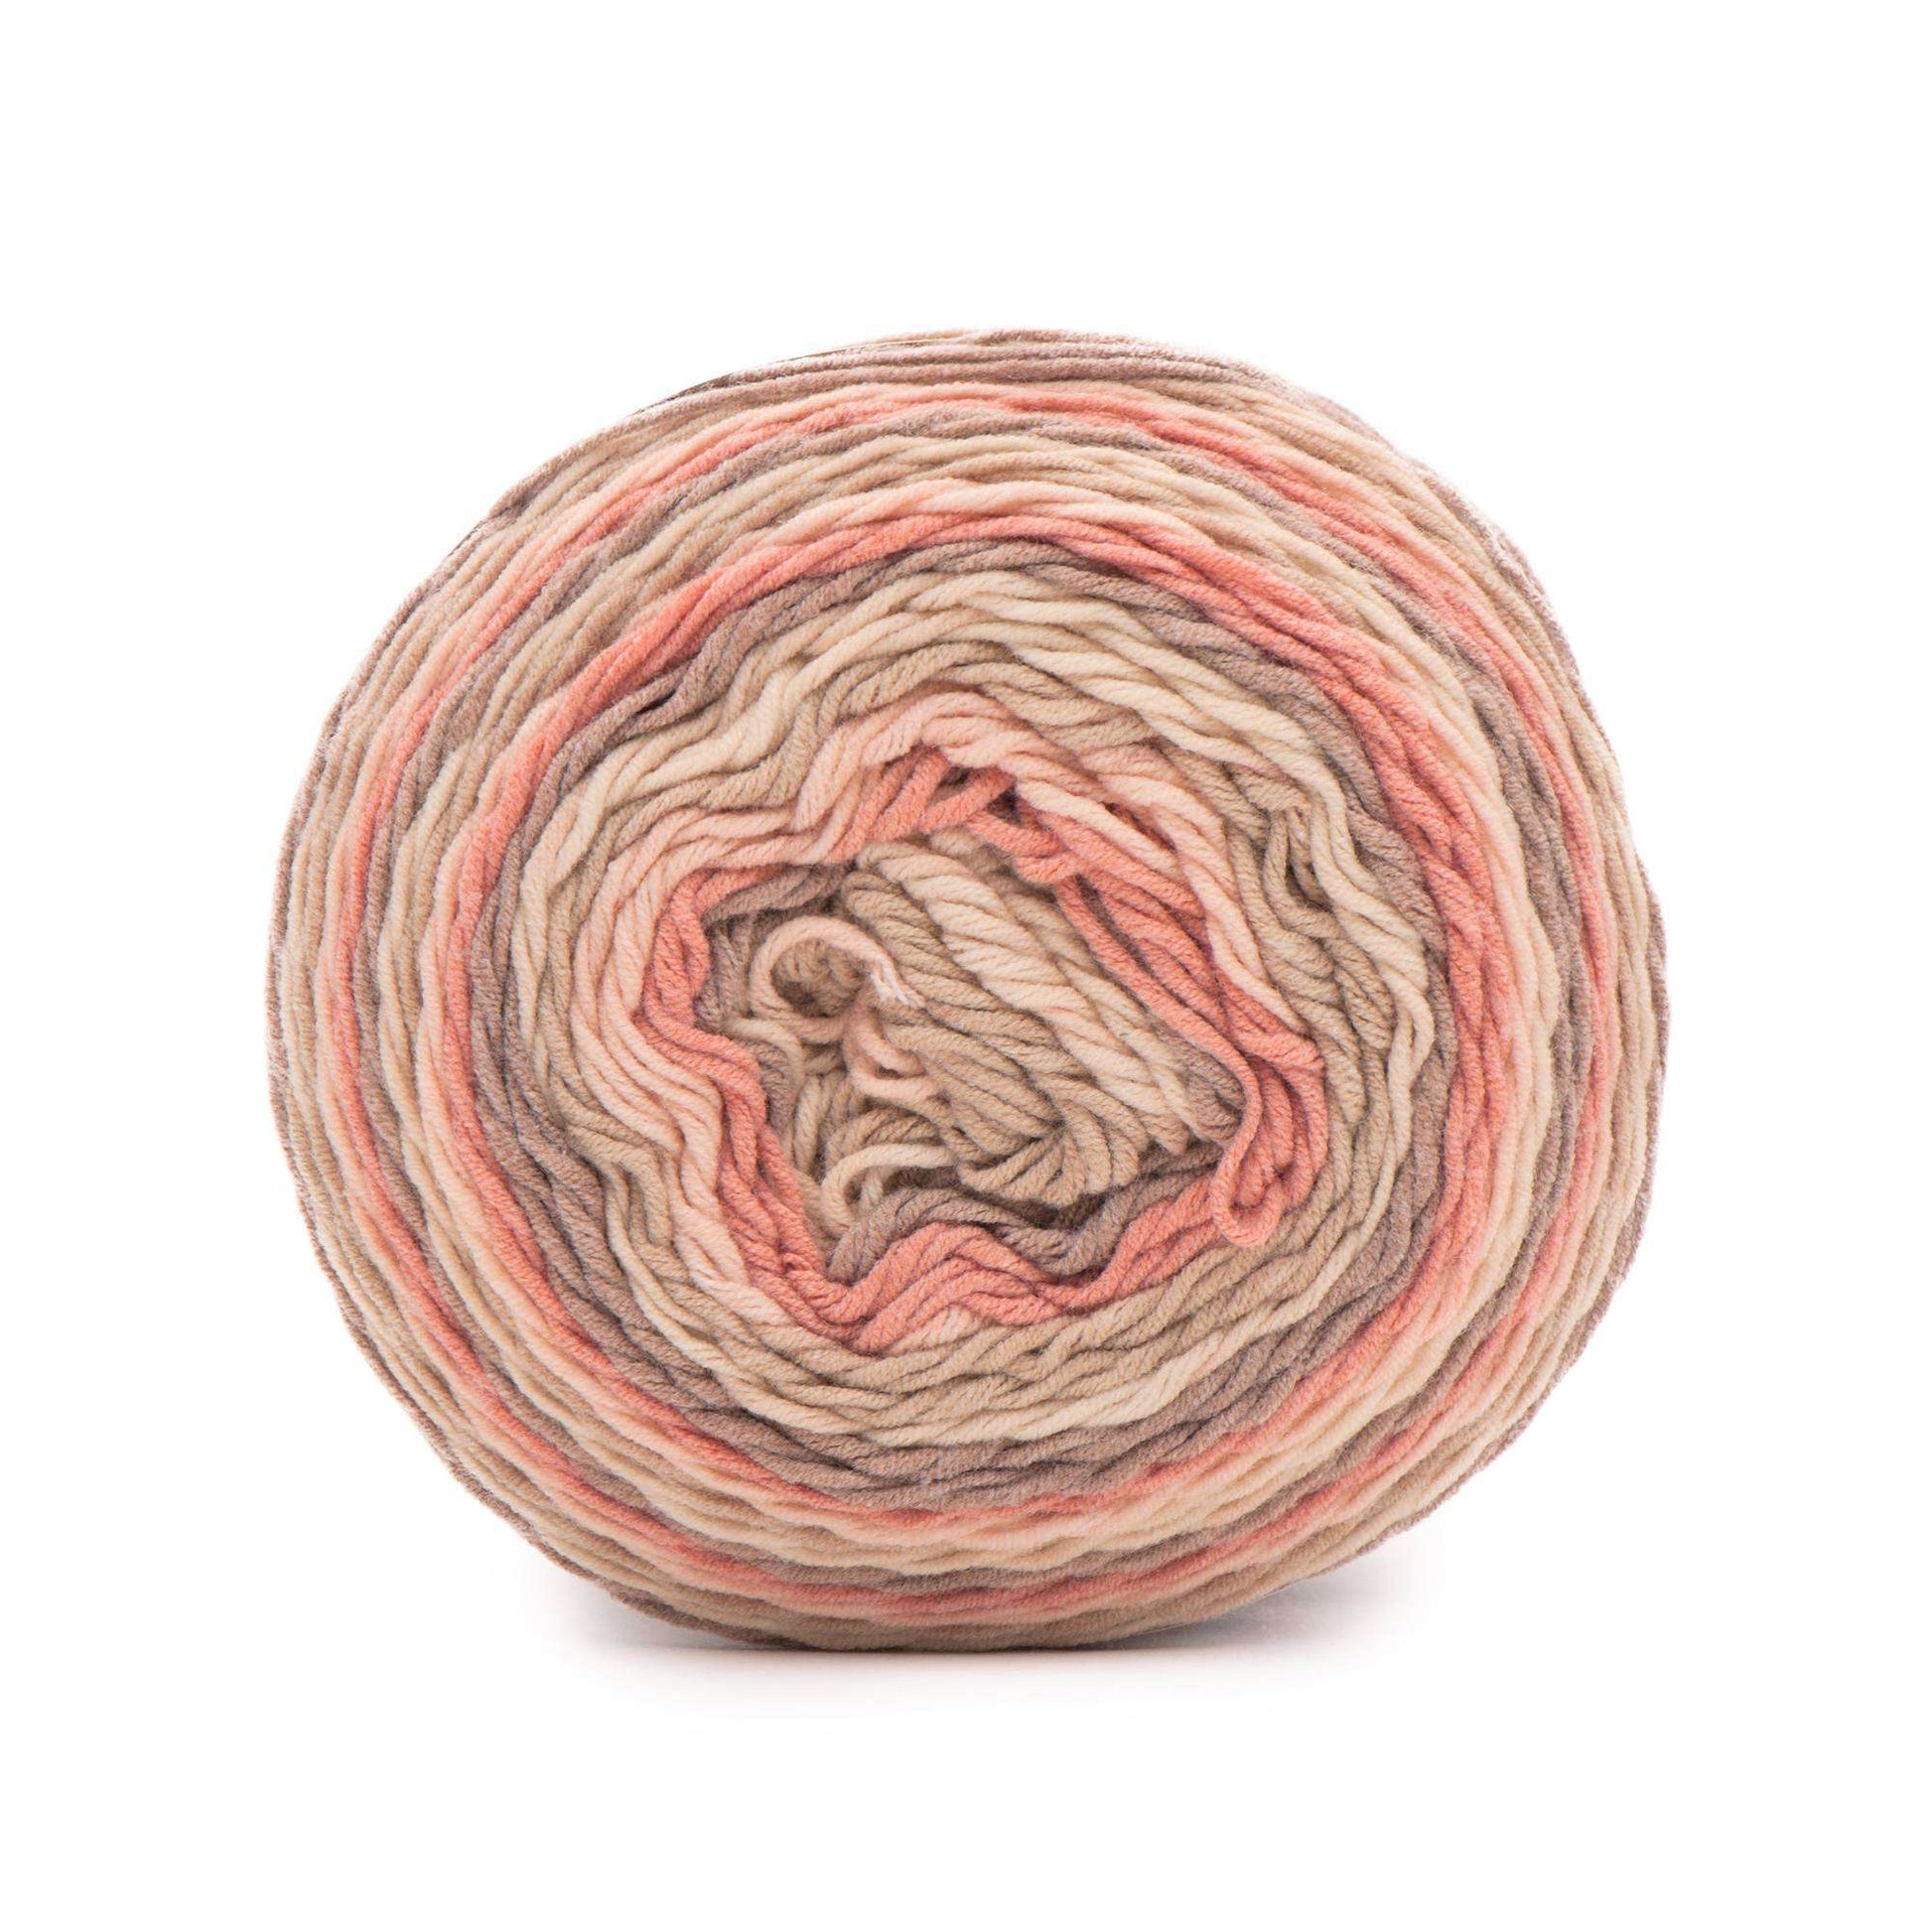 Caron Cotton Cakes Yarn (250g/8.8oz) - Clearance shades